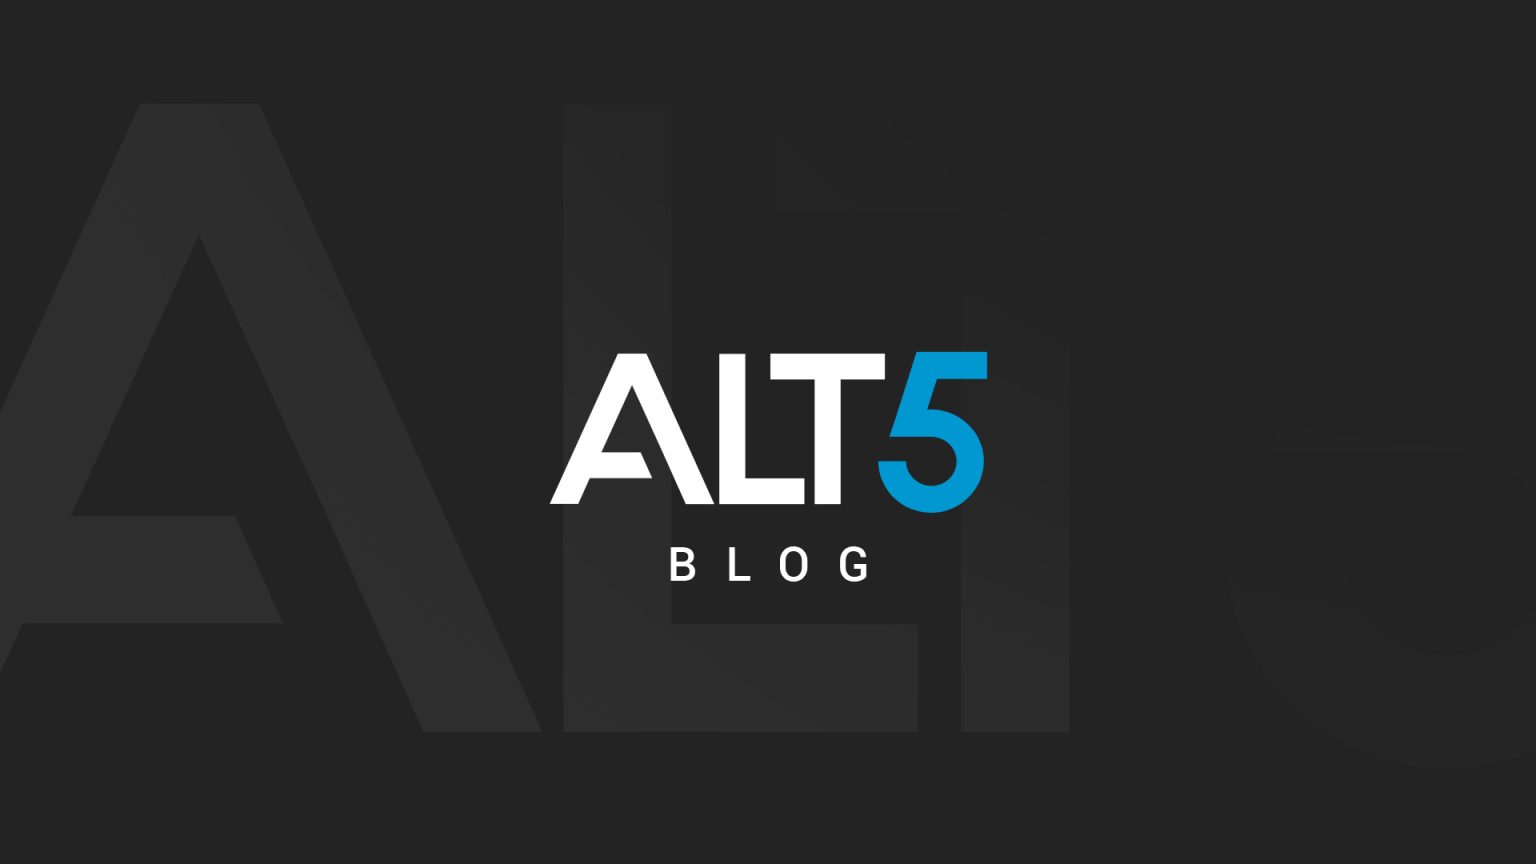 Blog Article ALT 5